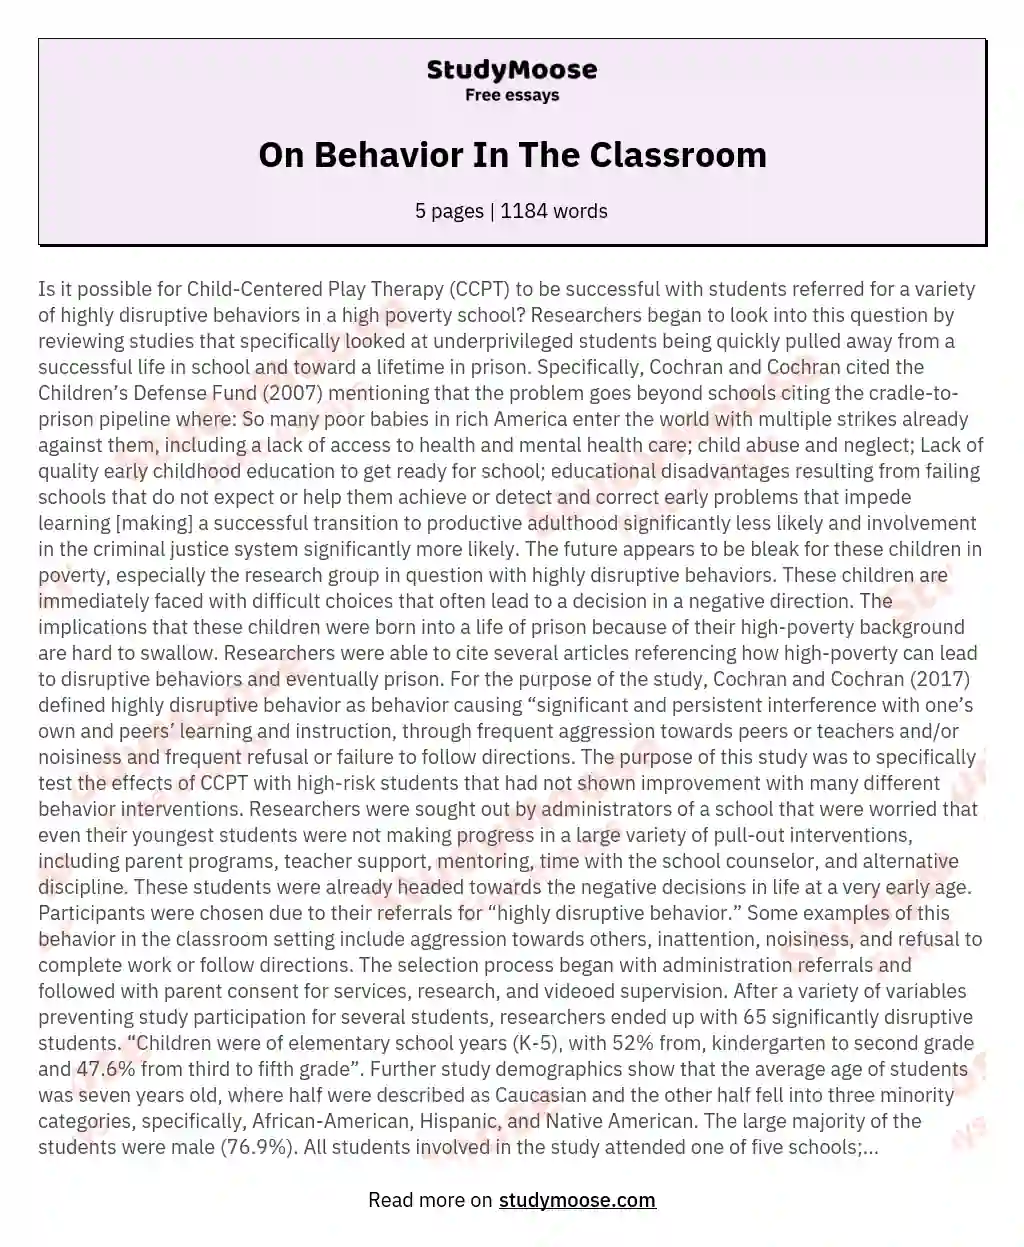 On Behavior In The Classroom essay